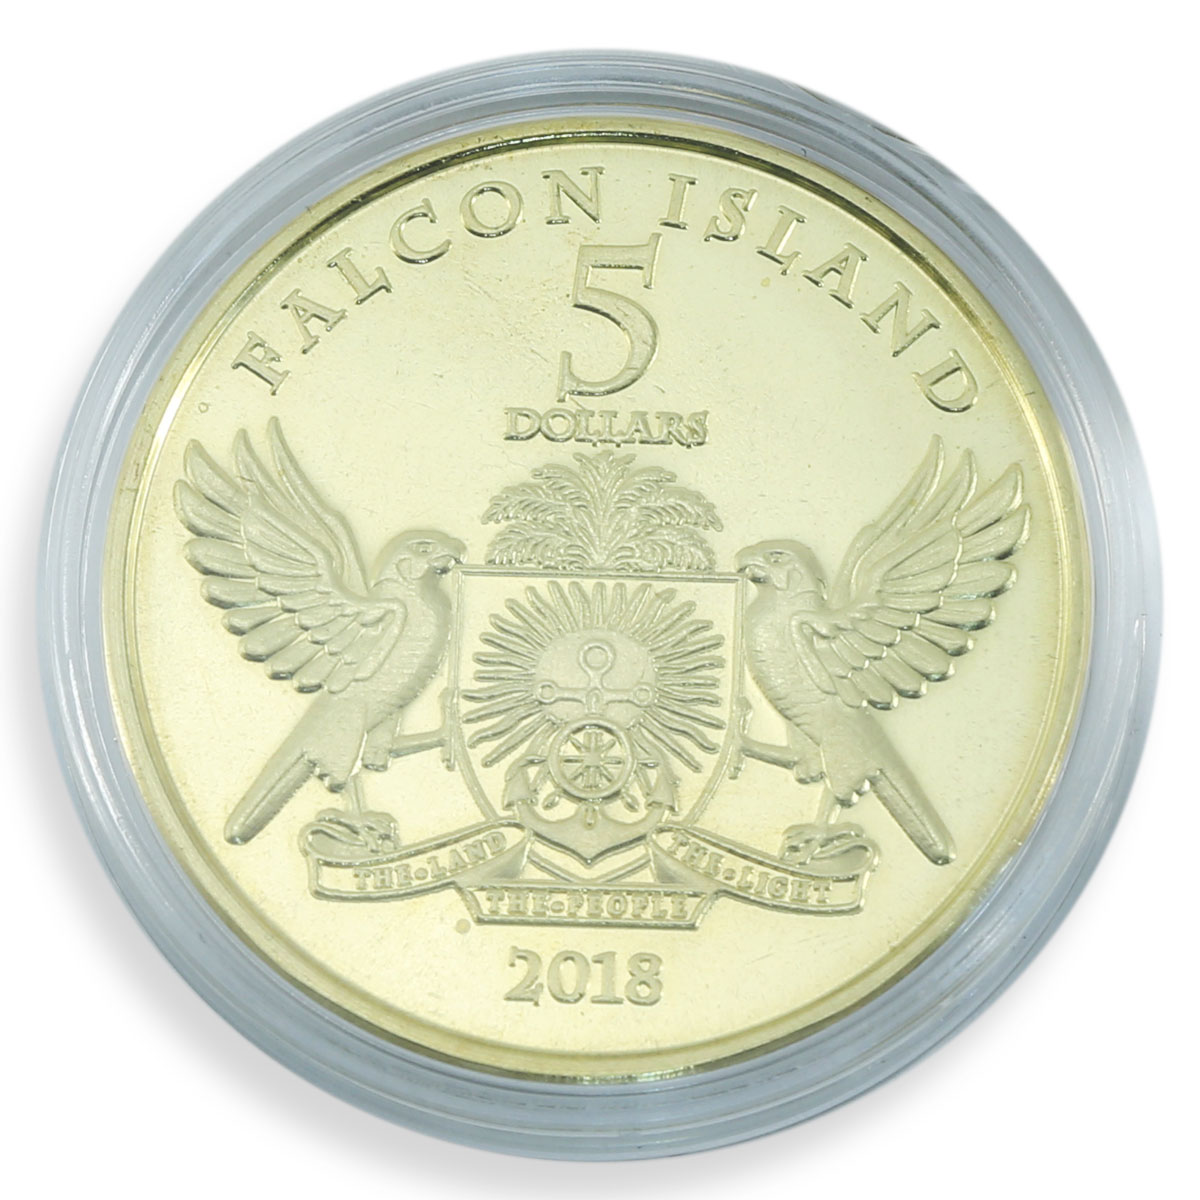 Falcon Island 5 dollars Siberian birds Osprey coin 2018